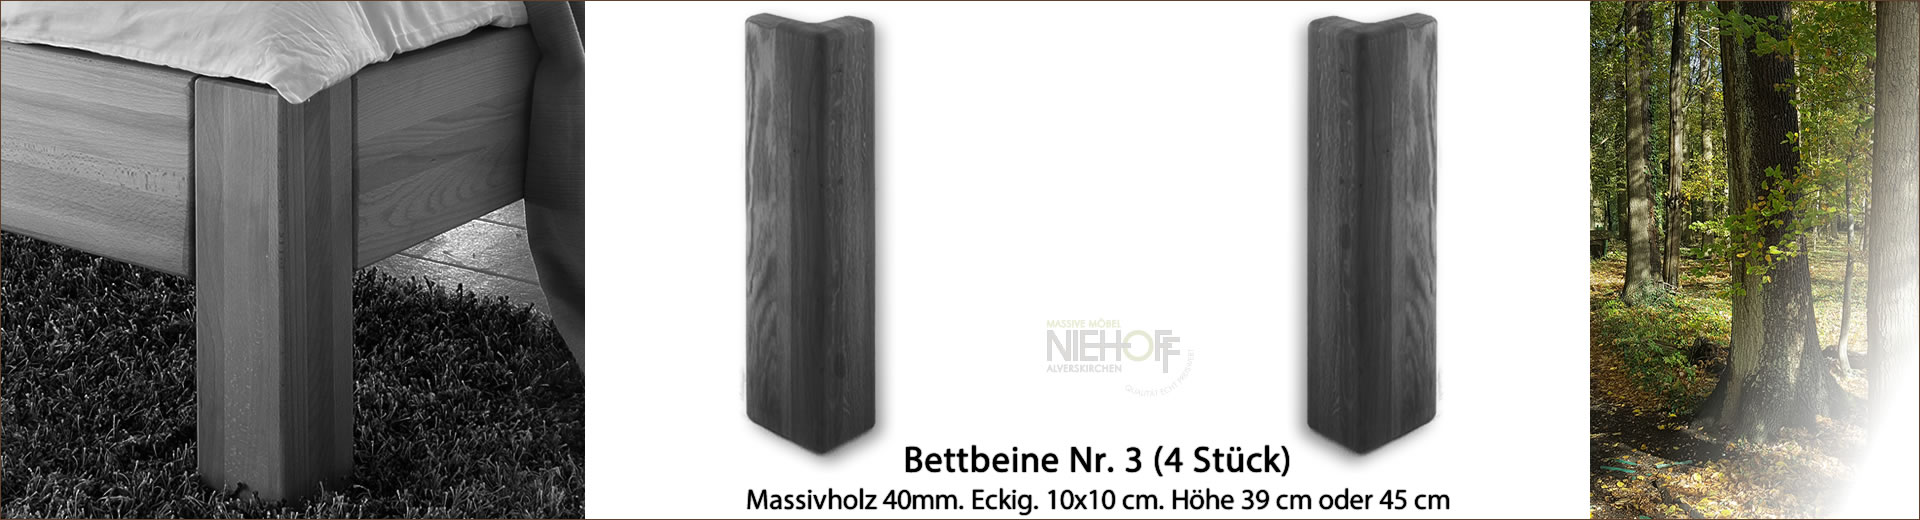 Bettbeine Nr. 3, Massivholz 40 mm eckig 10x10 cm, Höhe 39 cm oder 45 cm